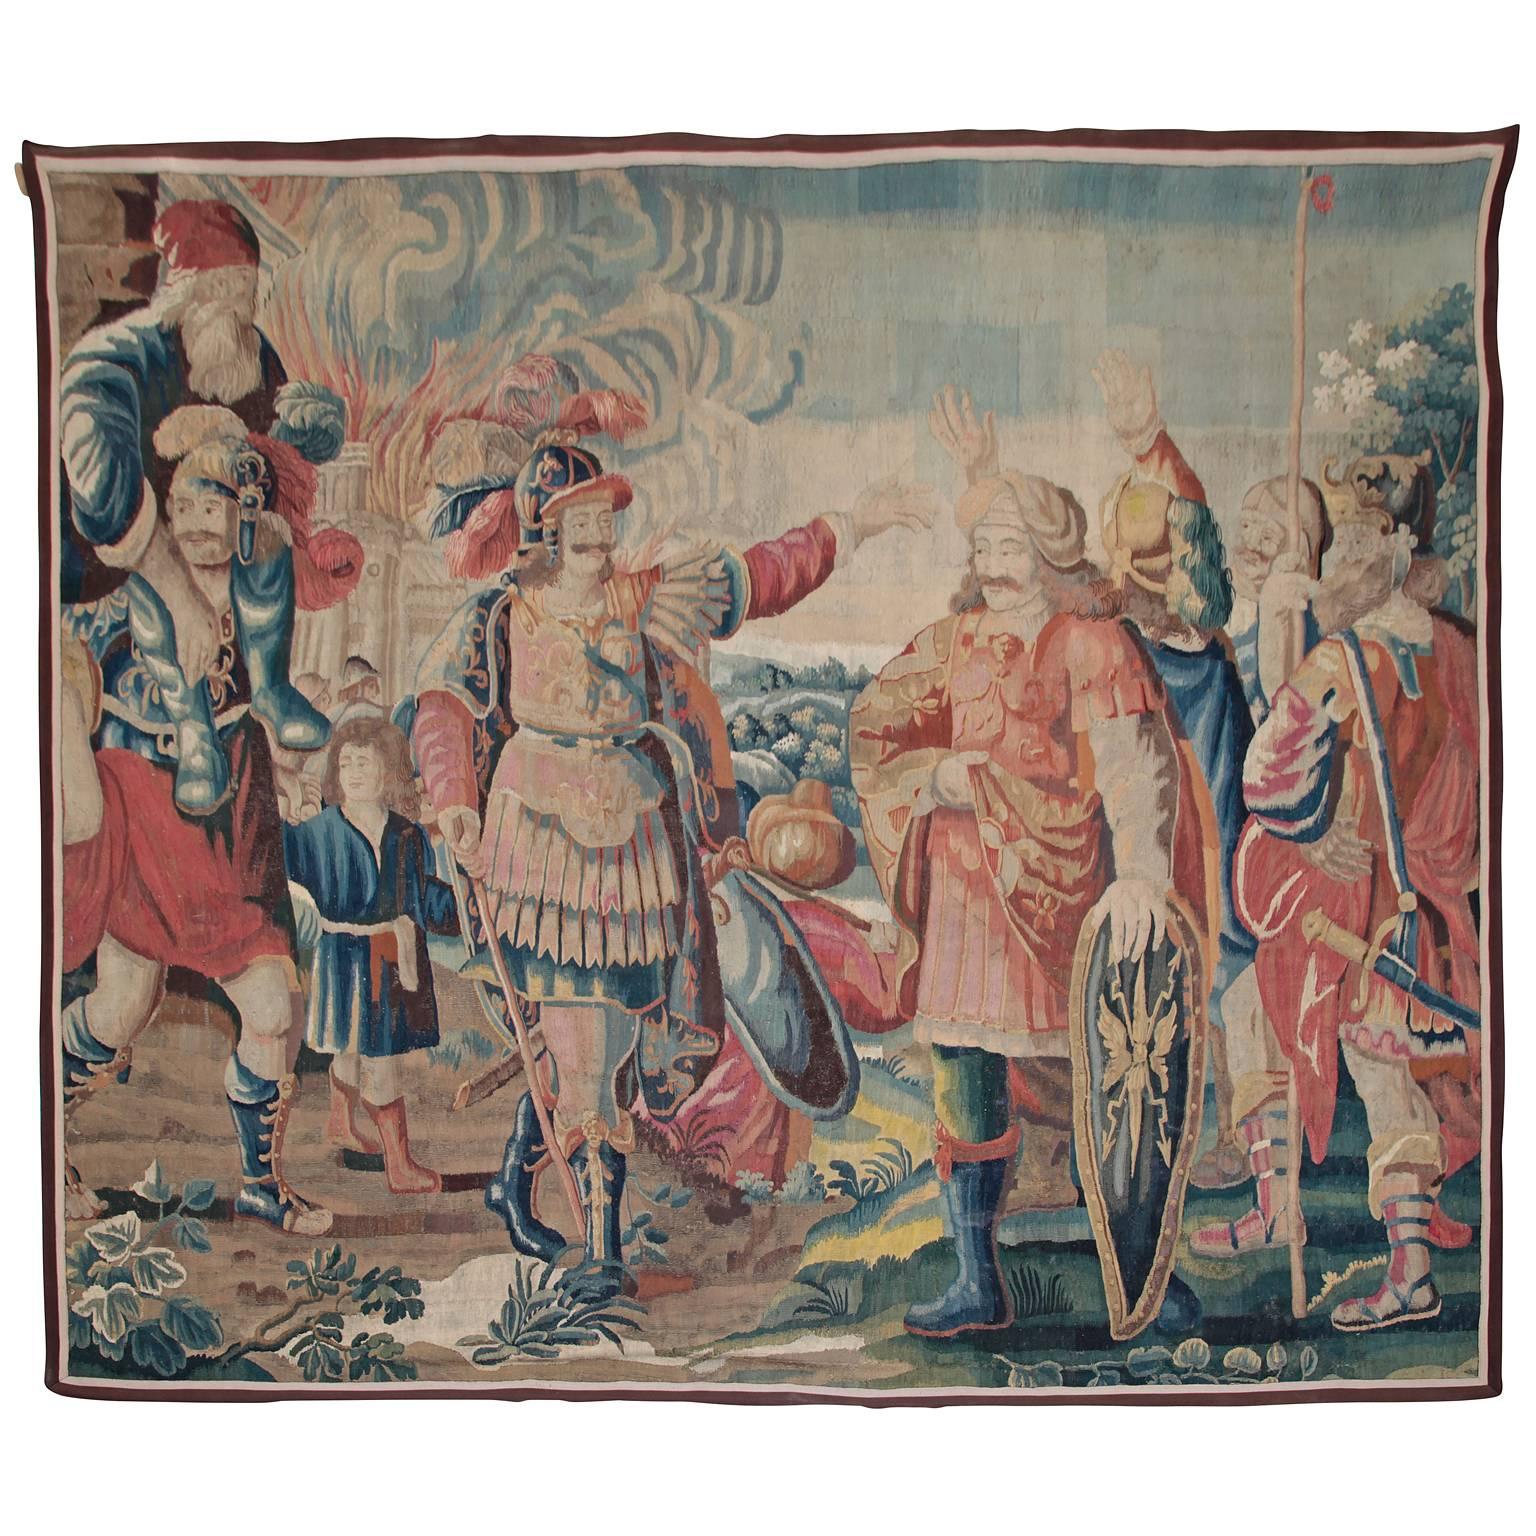 Gobelin Tapestry, France, 17th Century